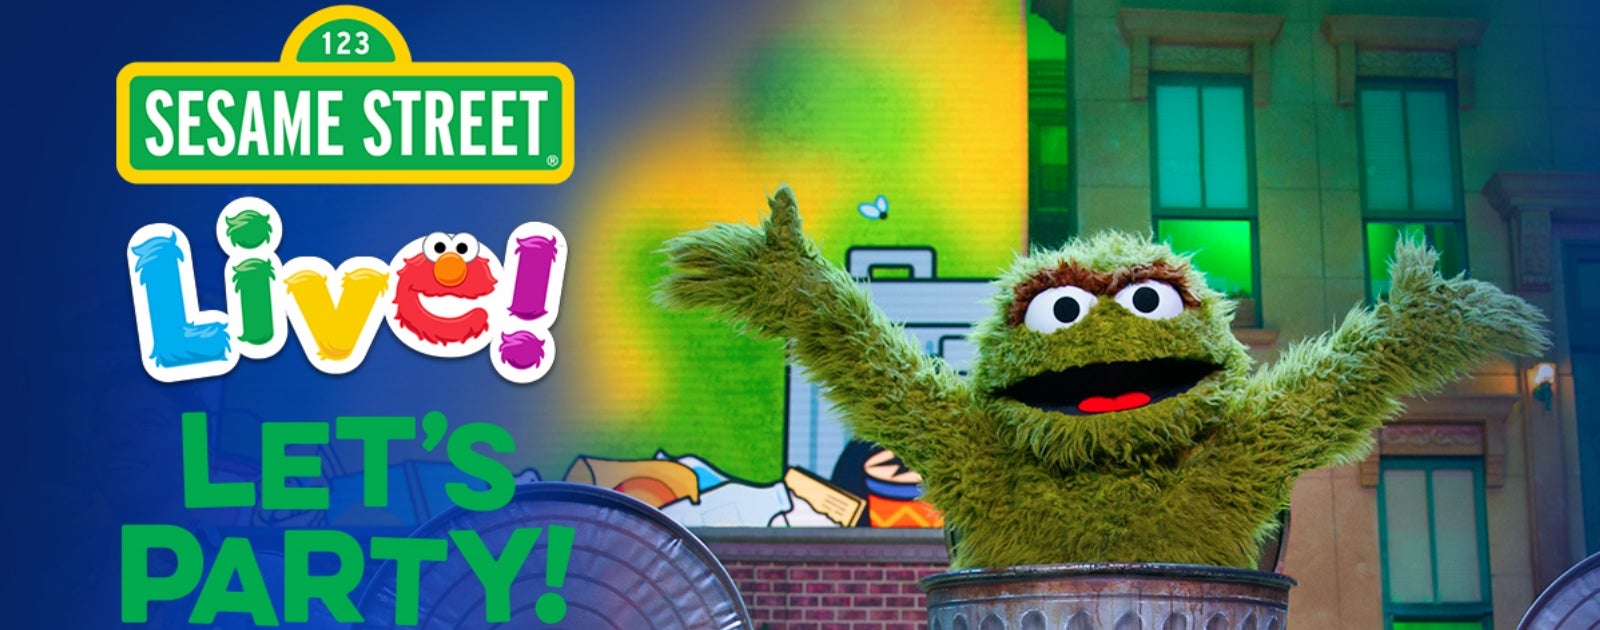 Sesame Street Live! Let’s Party!